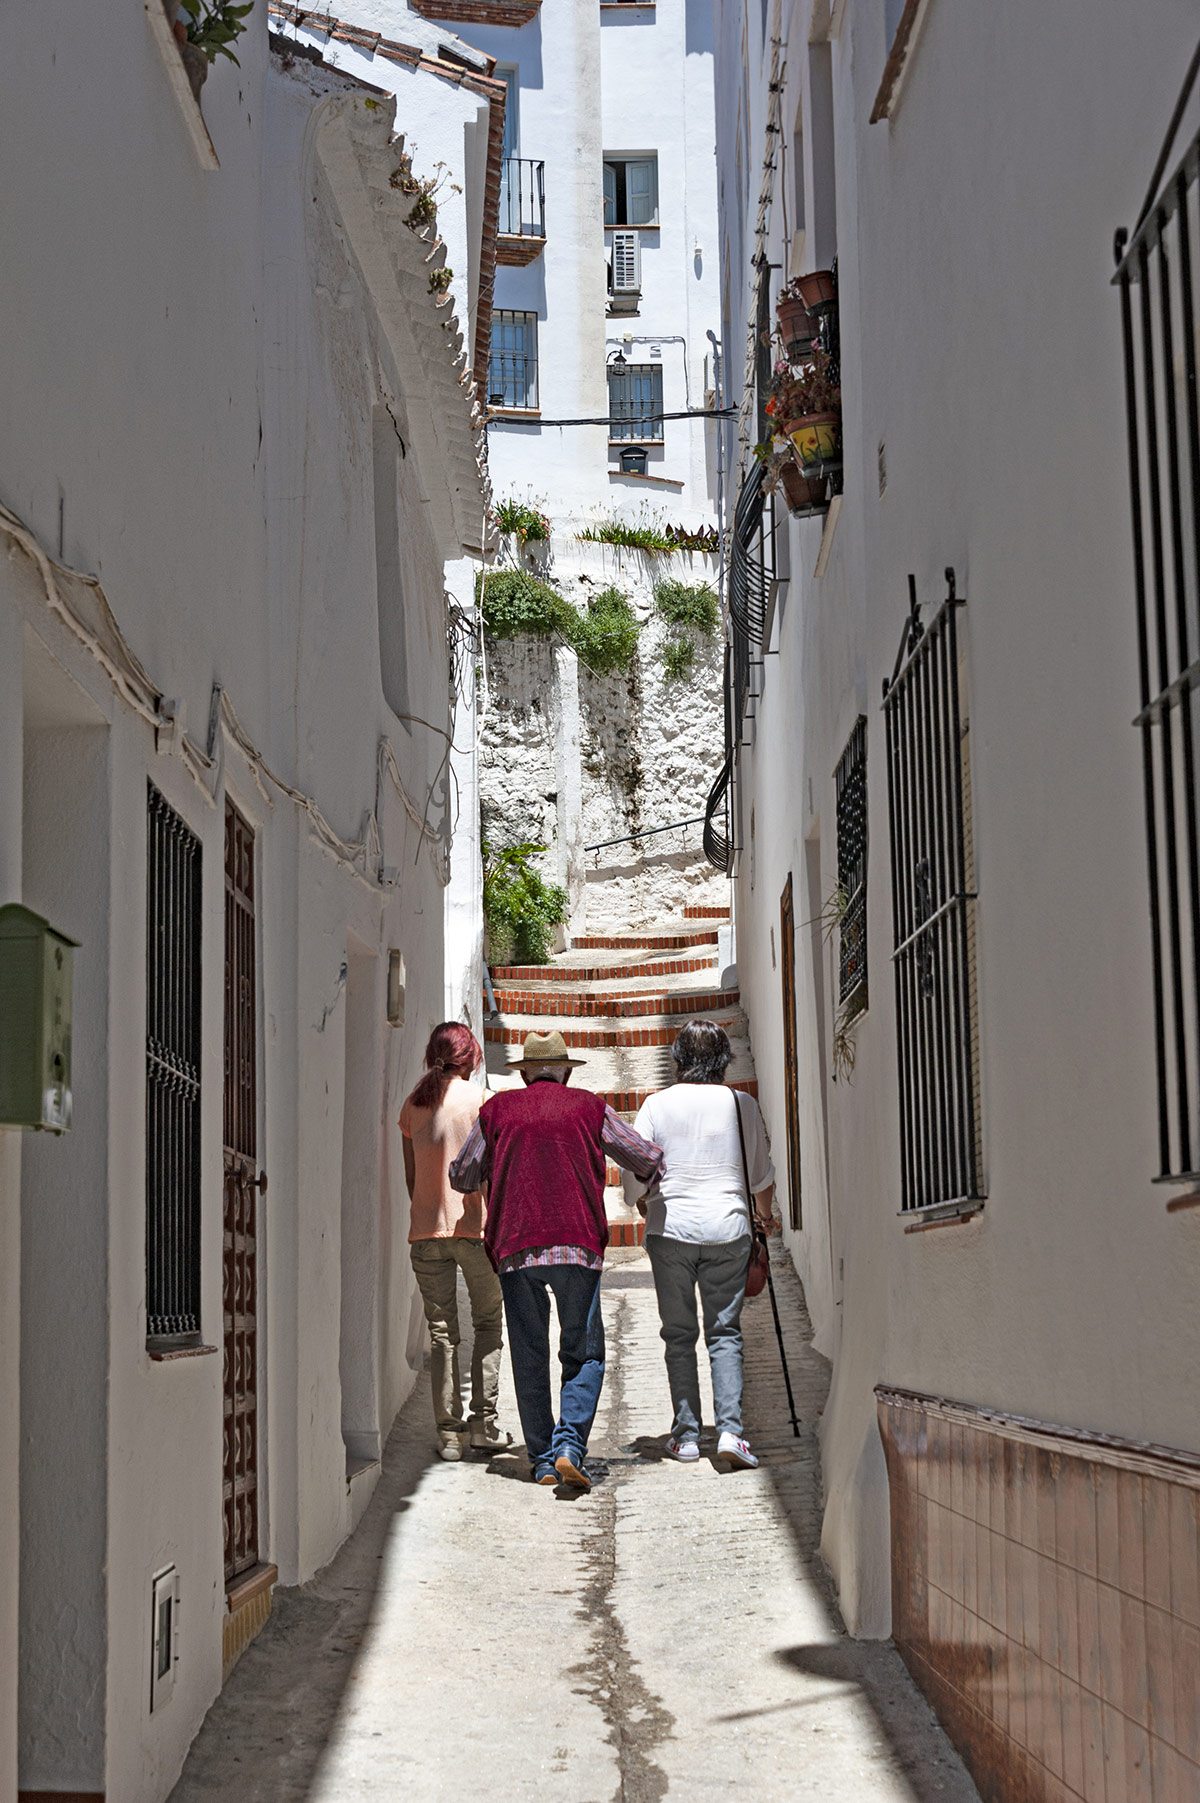 Ojén’s narrow streets are a joy to stroll around